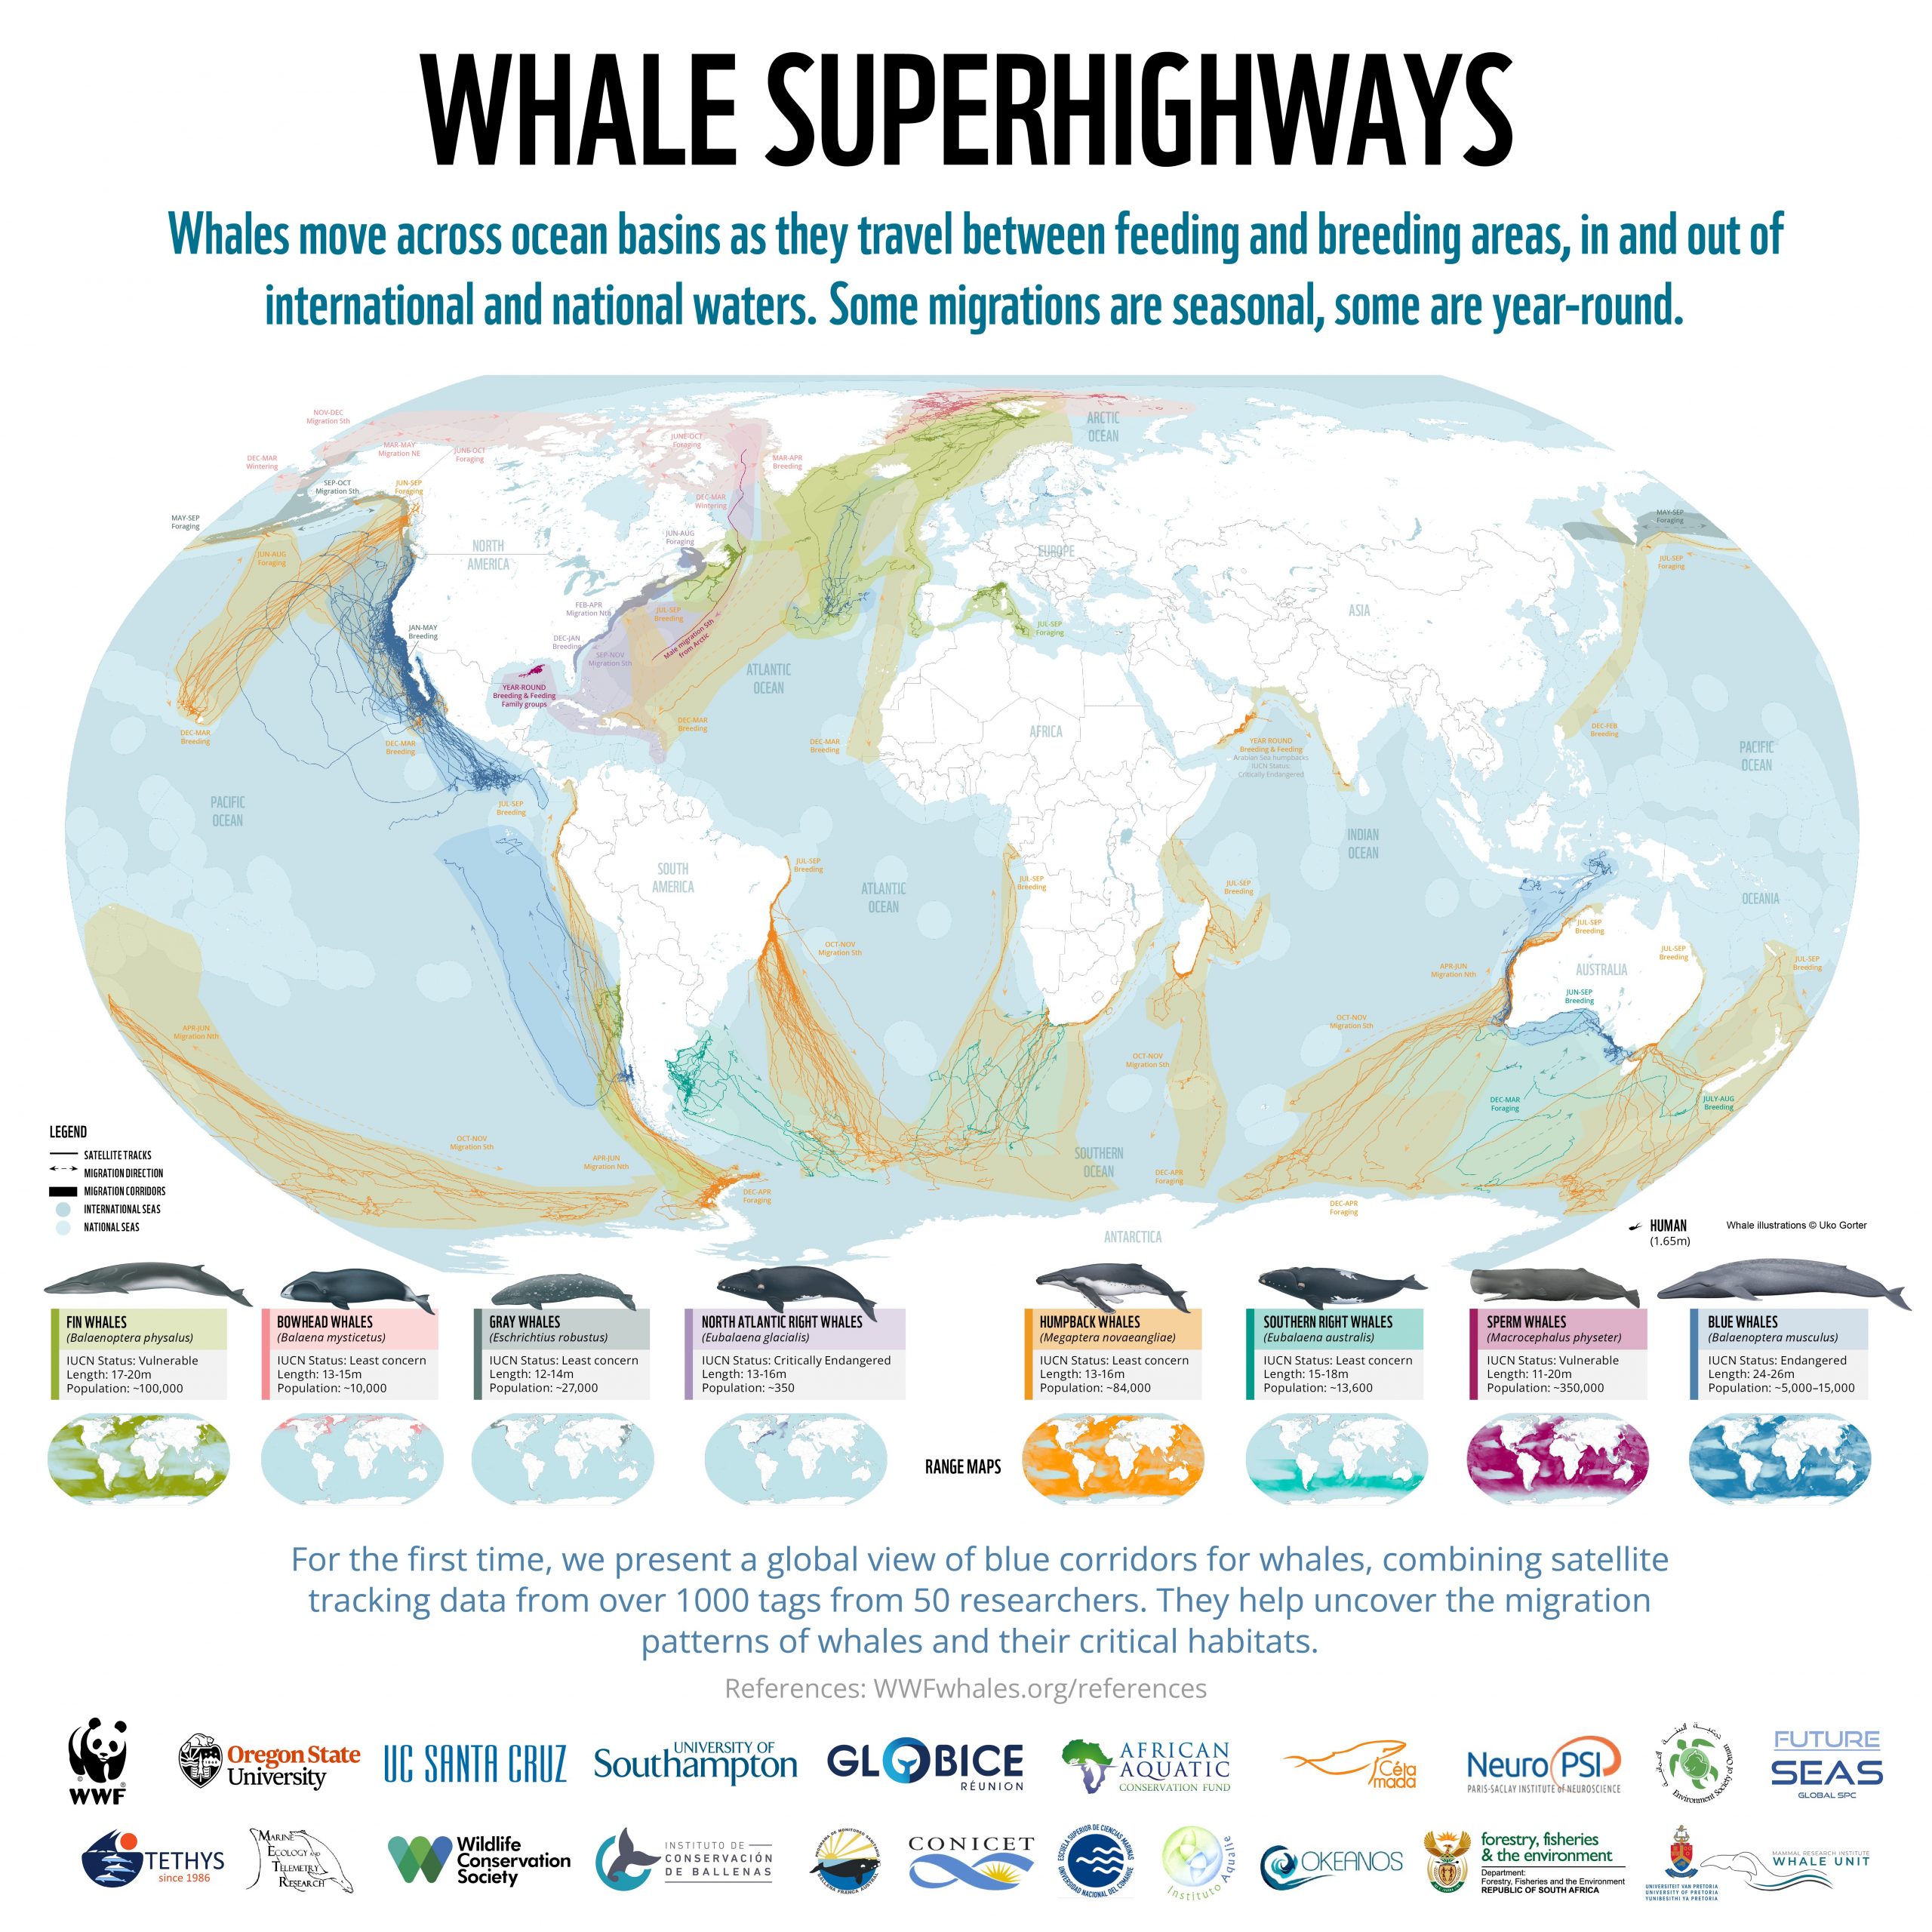 voies migratoires des baleines